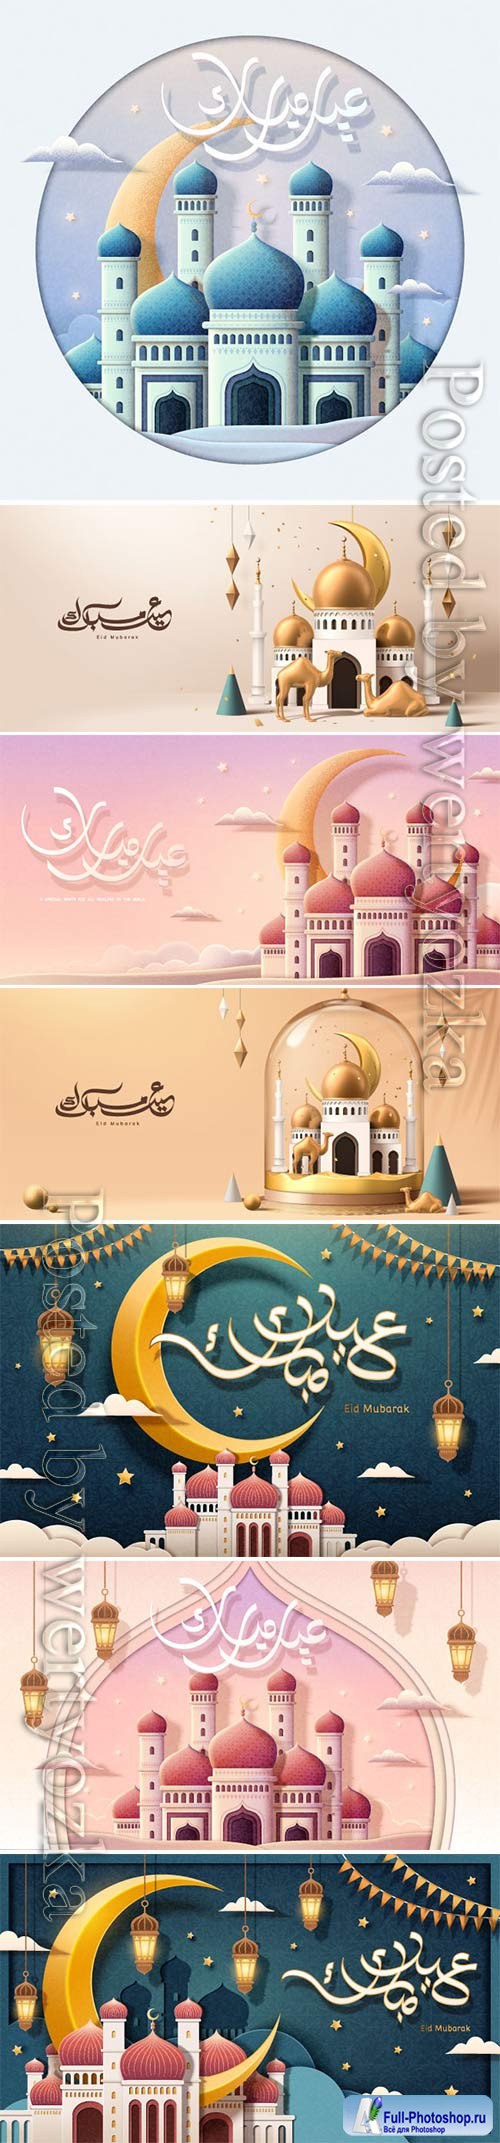 Eid mubarak calligraphy vector banner